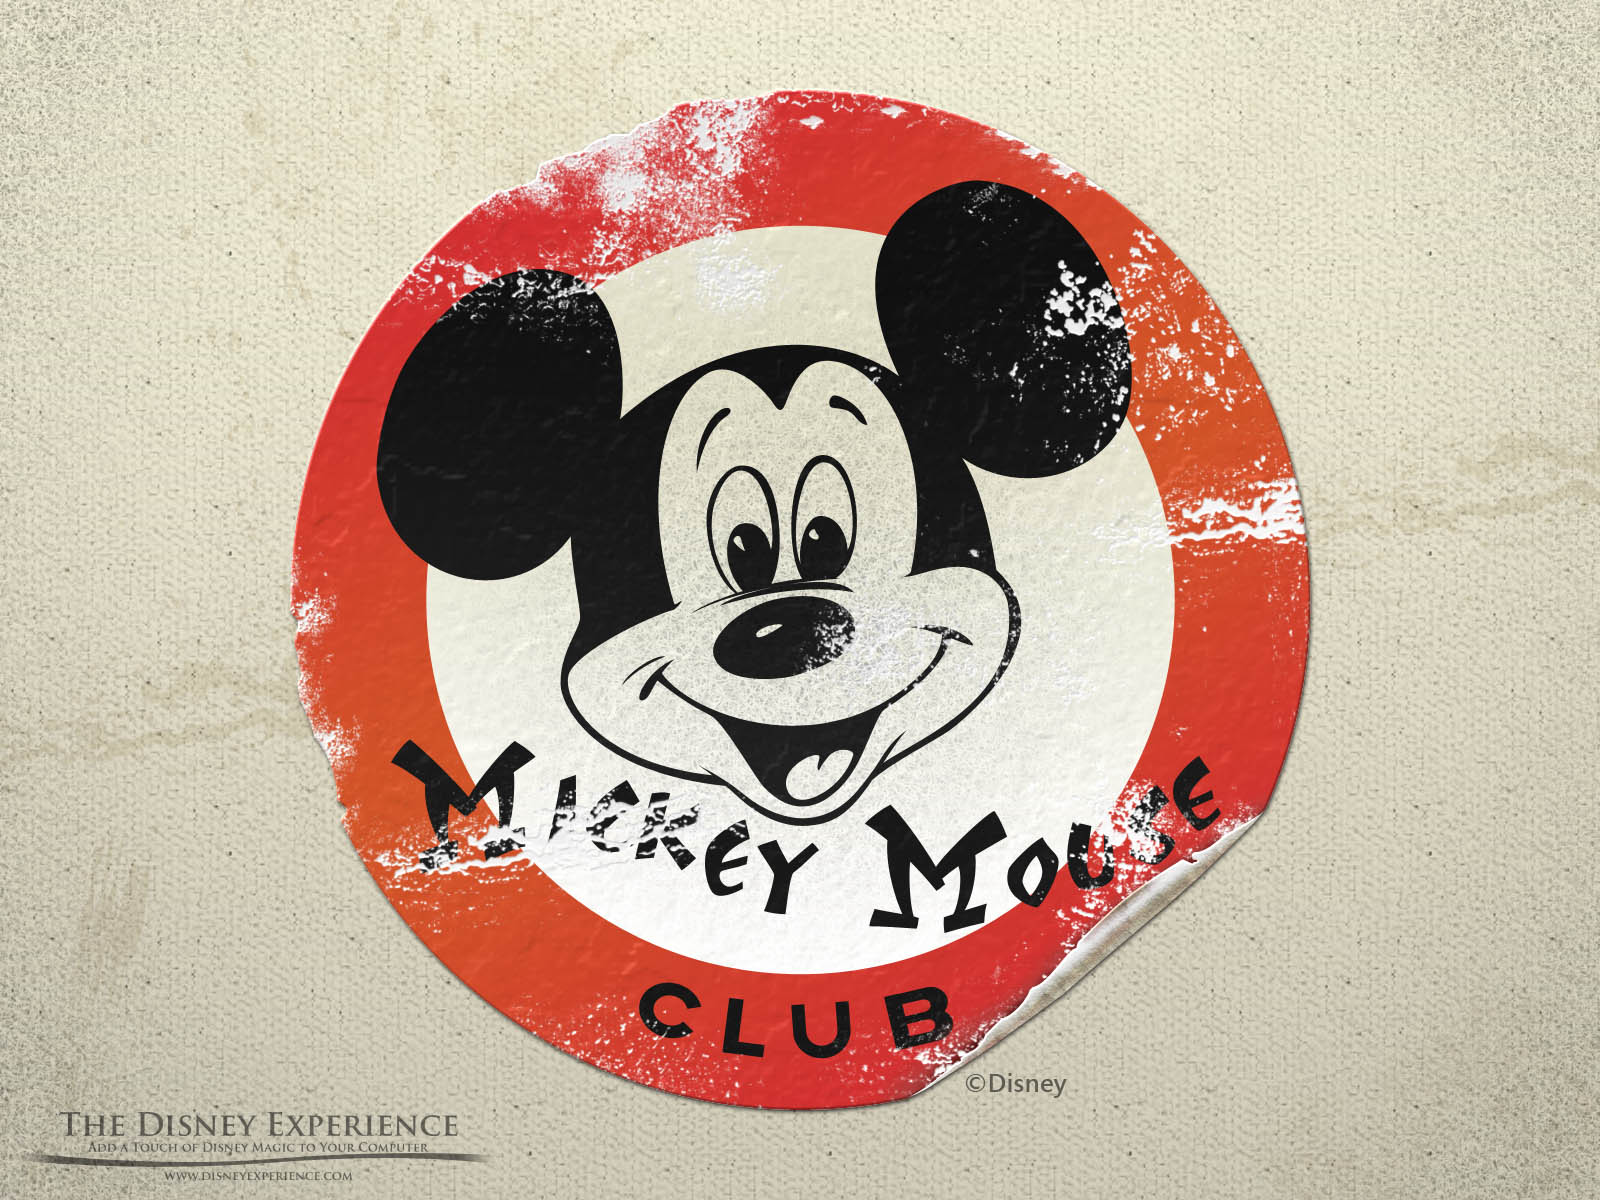 Mickey Mouse Club Sticker